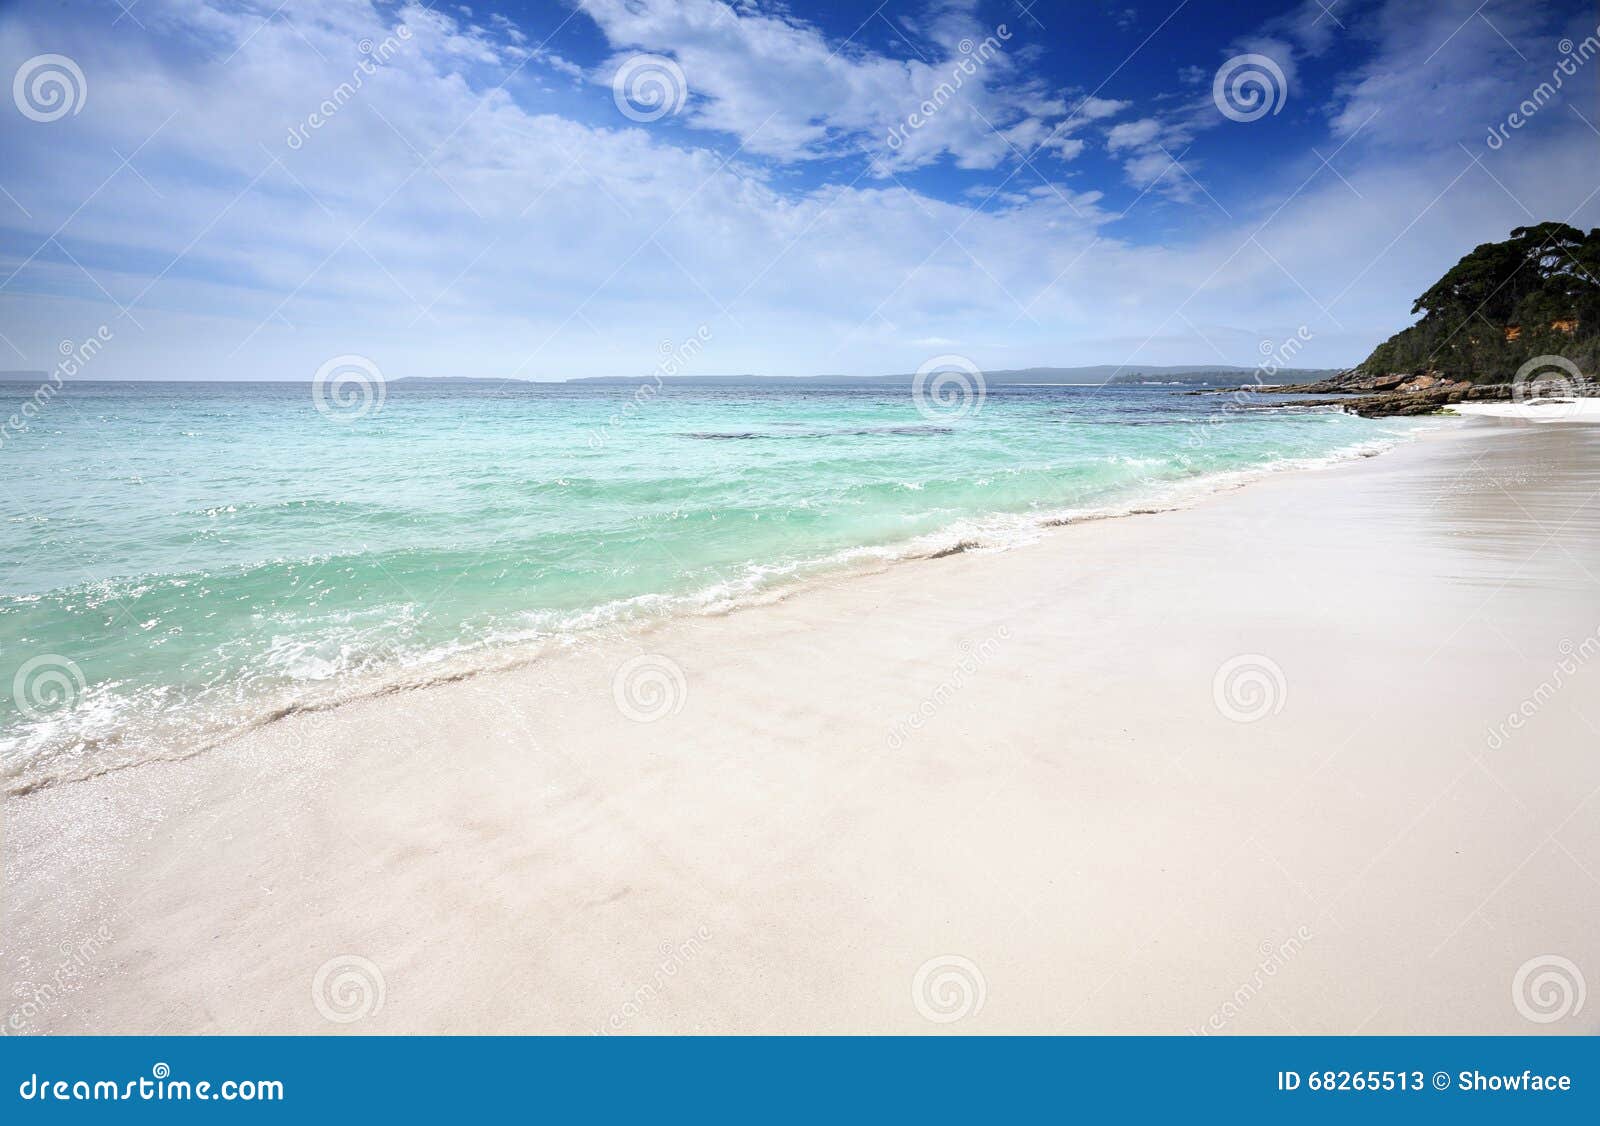 beautiful beach in jervis bay, australia